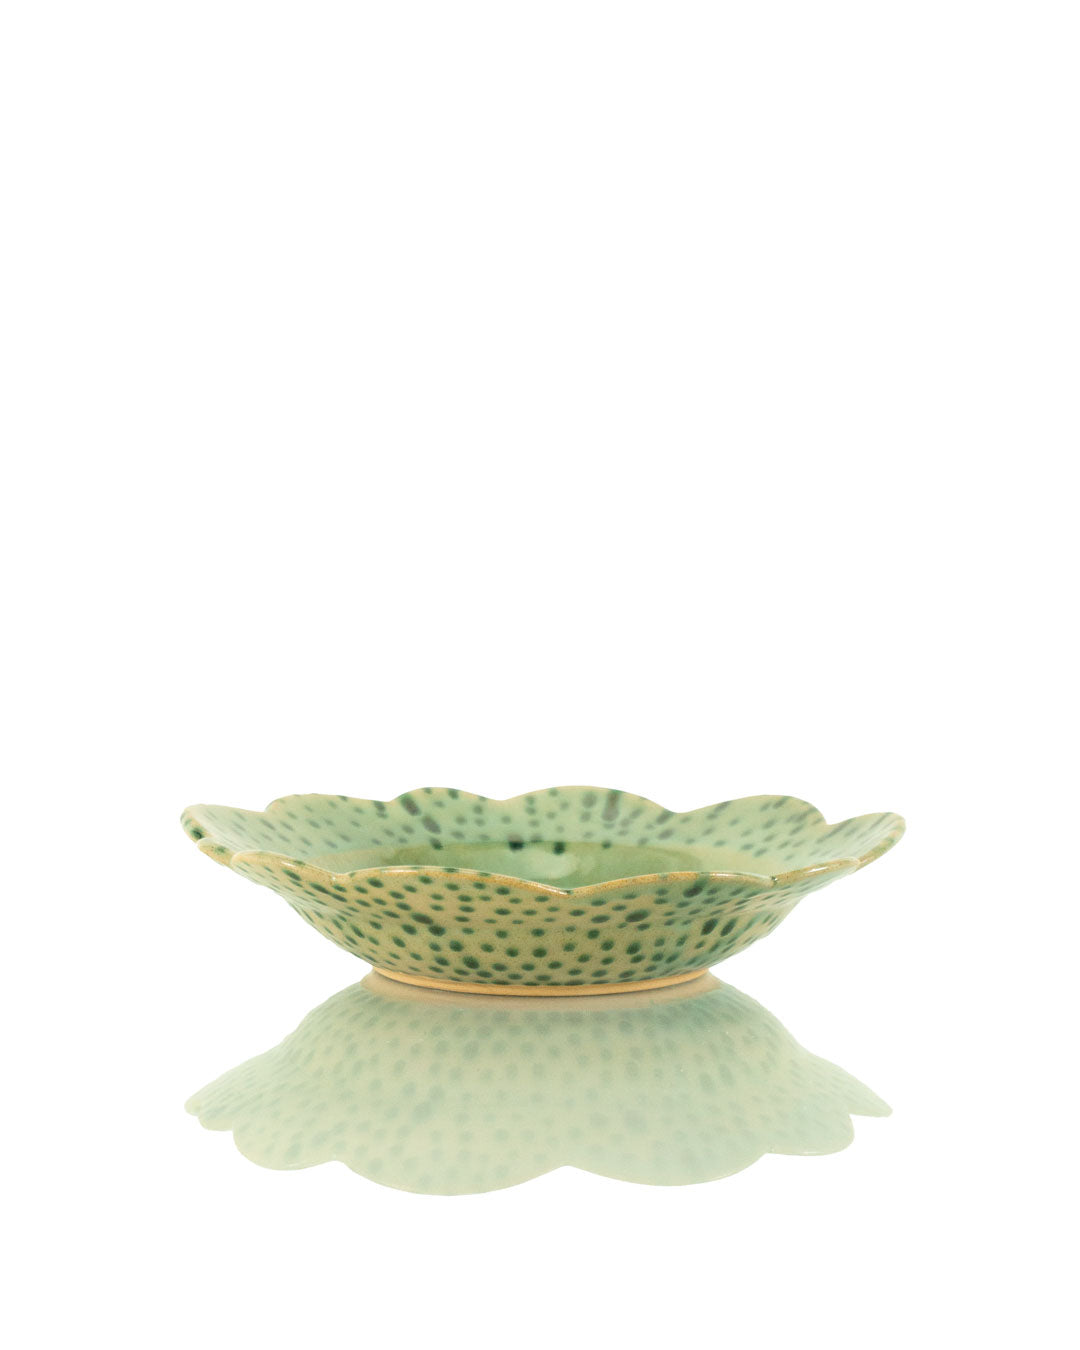 Rimmed Green Dot Bowl | Pasta Bowl | Medium Bowl (hb-215)